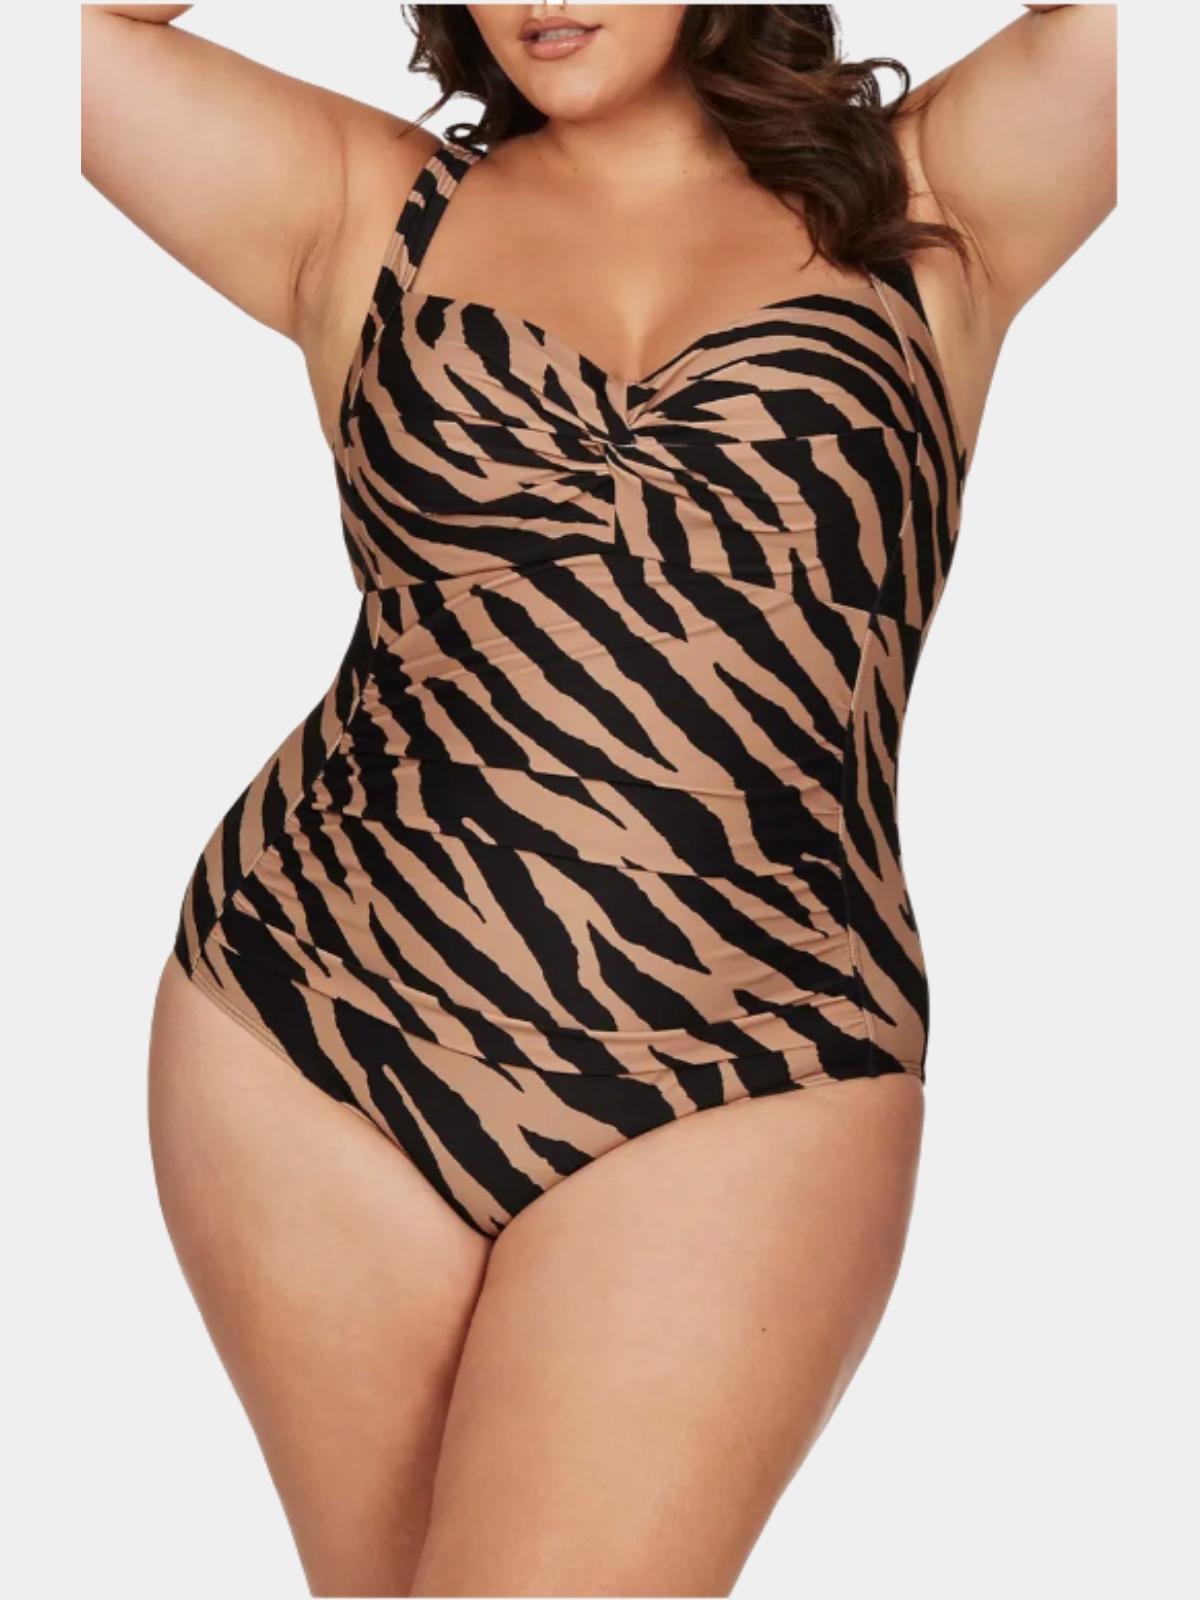 https://www.purelyswim.com/wp-content/uploads/2022/06/artesands-womens-ben-galay-botticelli-one-piece-swimsuit-front.jpg